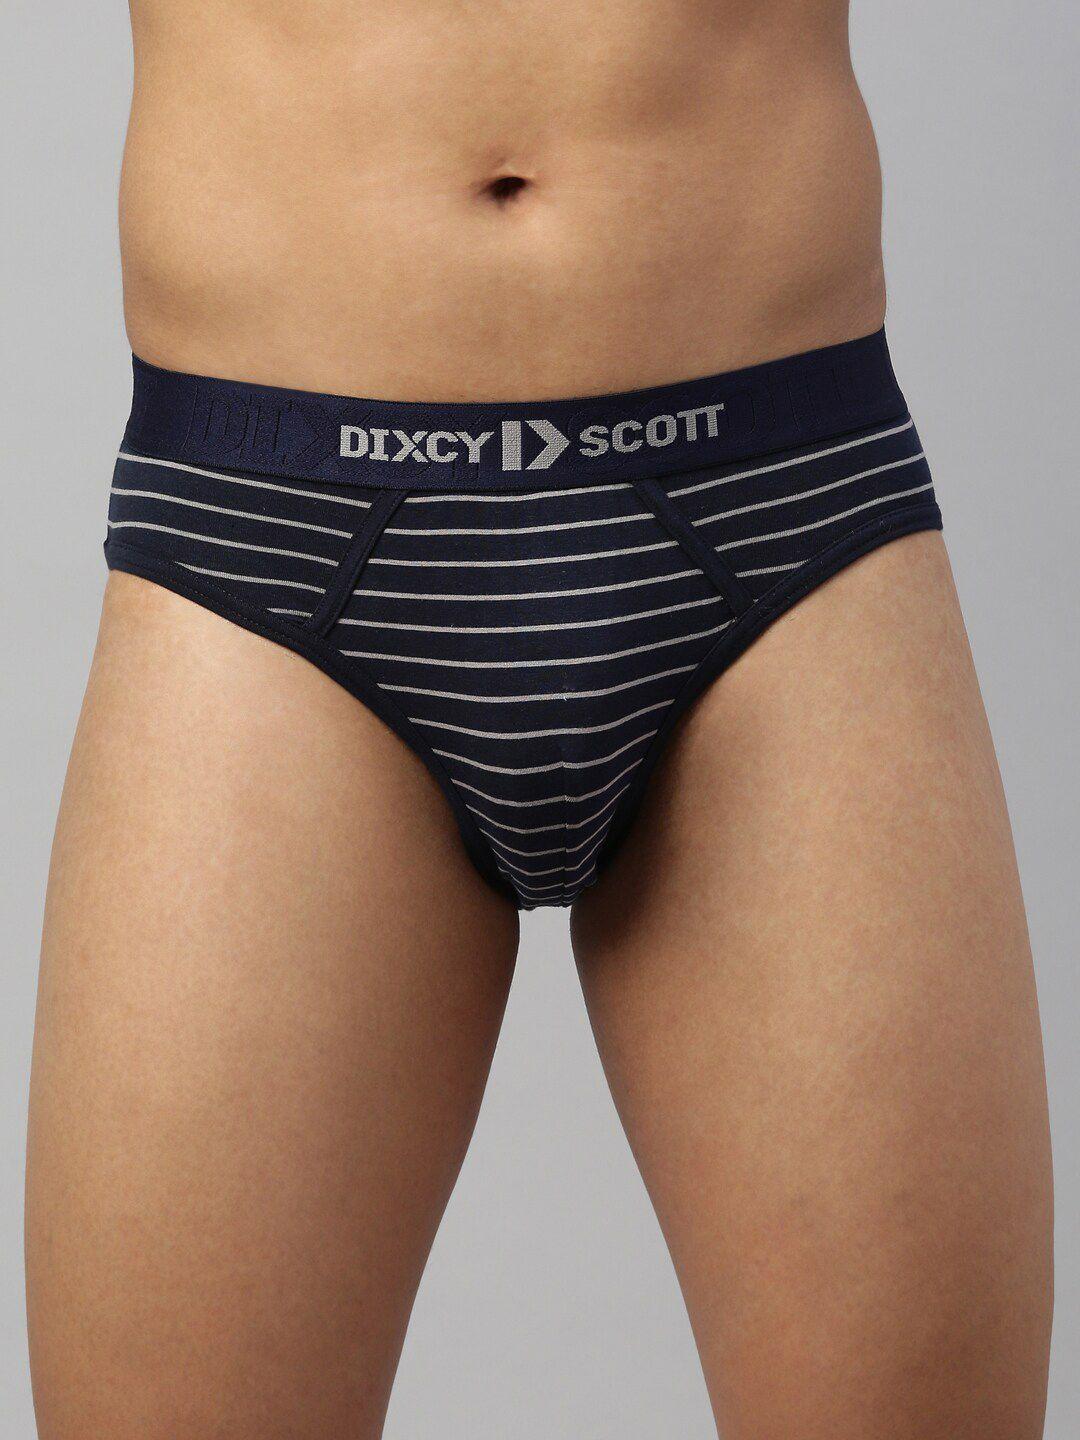 dixcy scott maximus men navy blue & grey striped pure cotton basic briefs